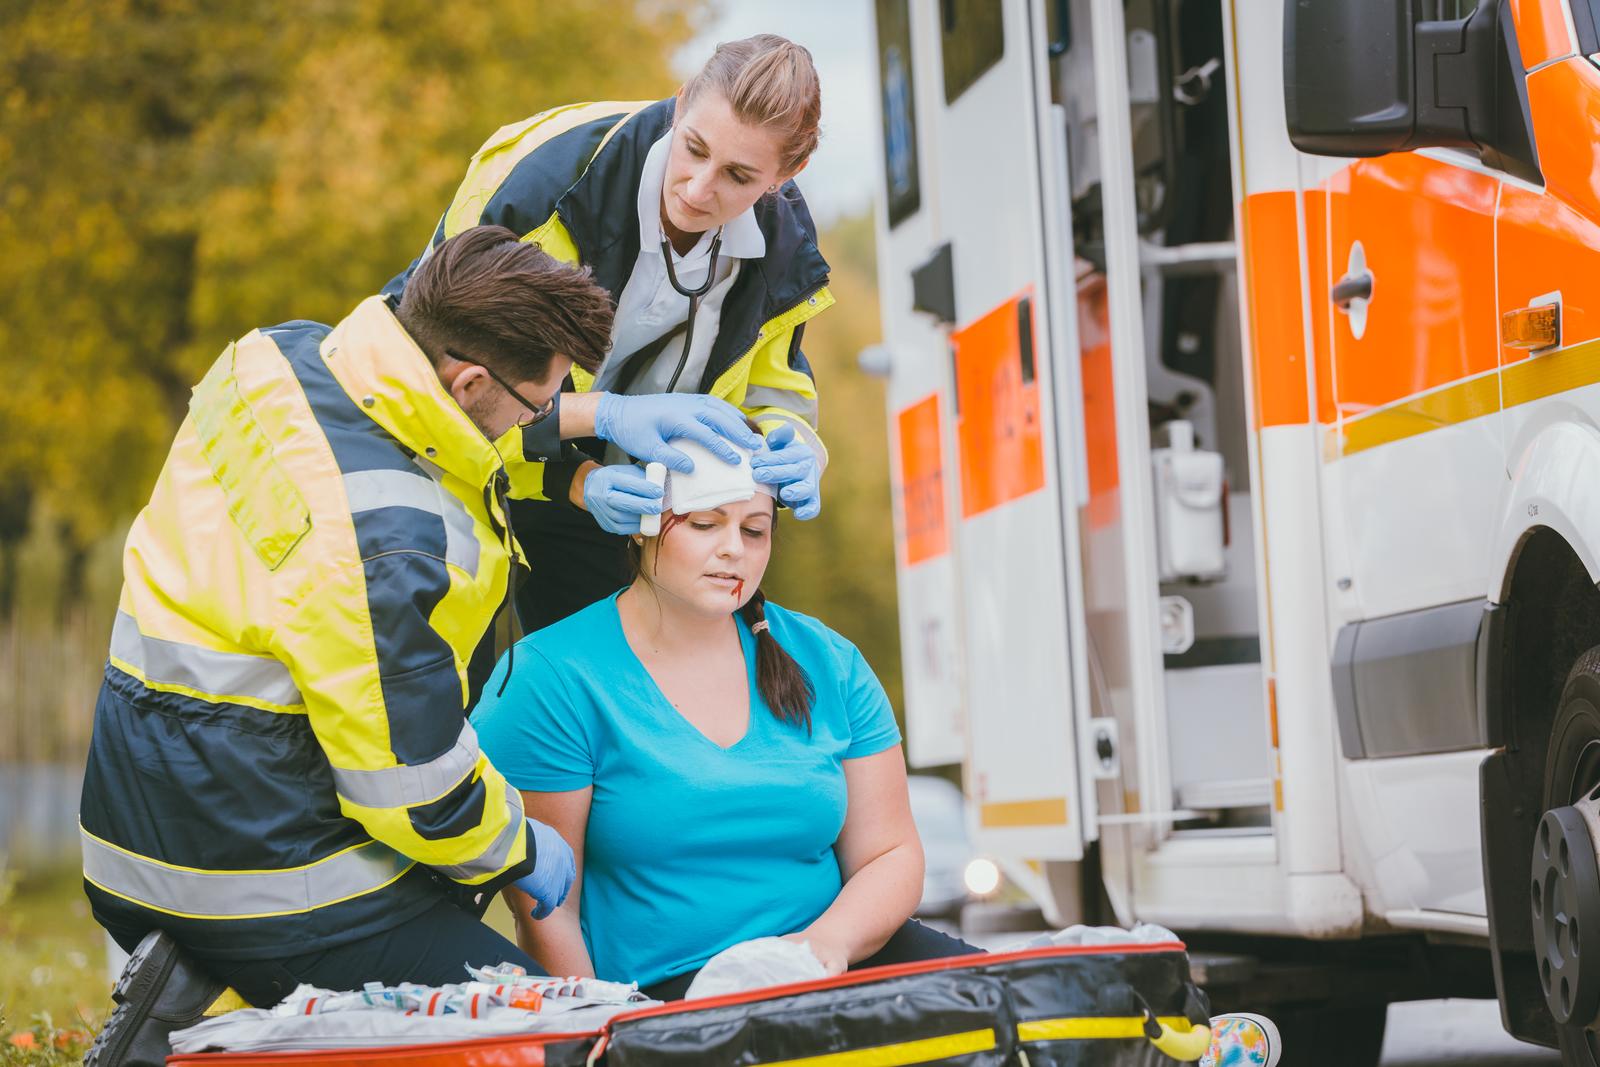 Emergency medics dressing head wound of injured woman